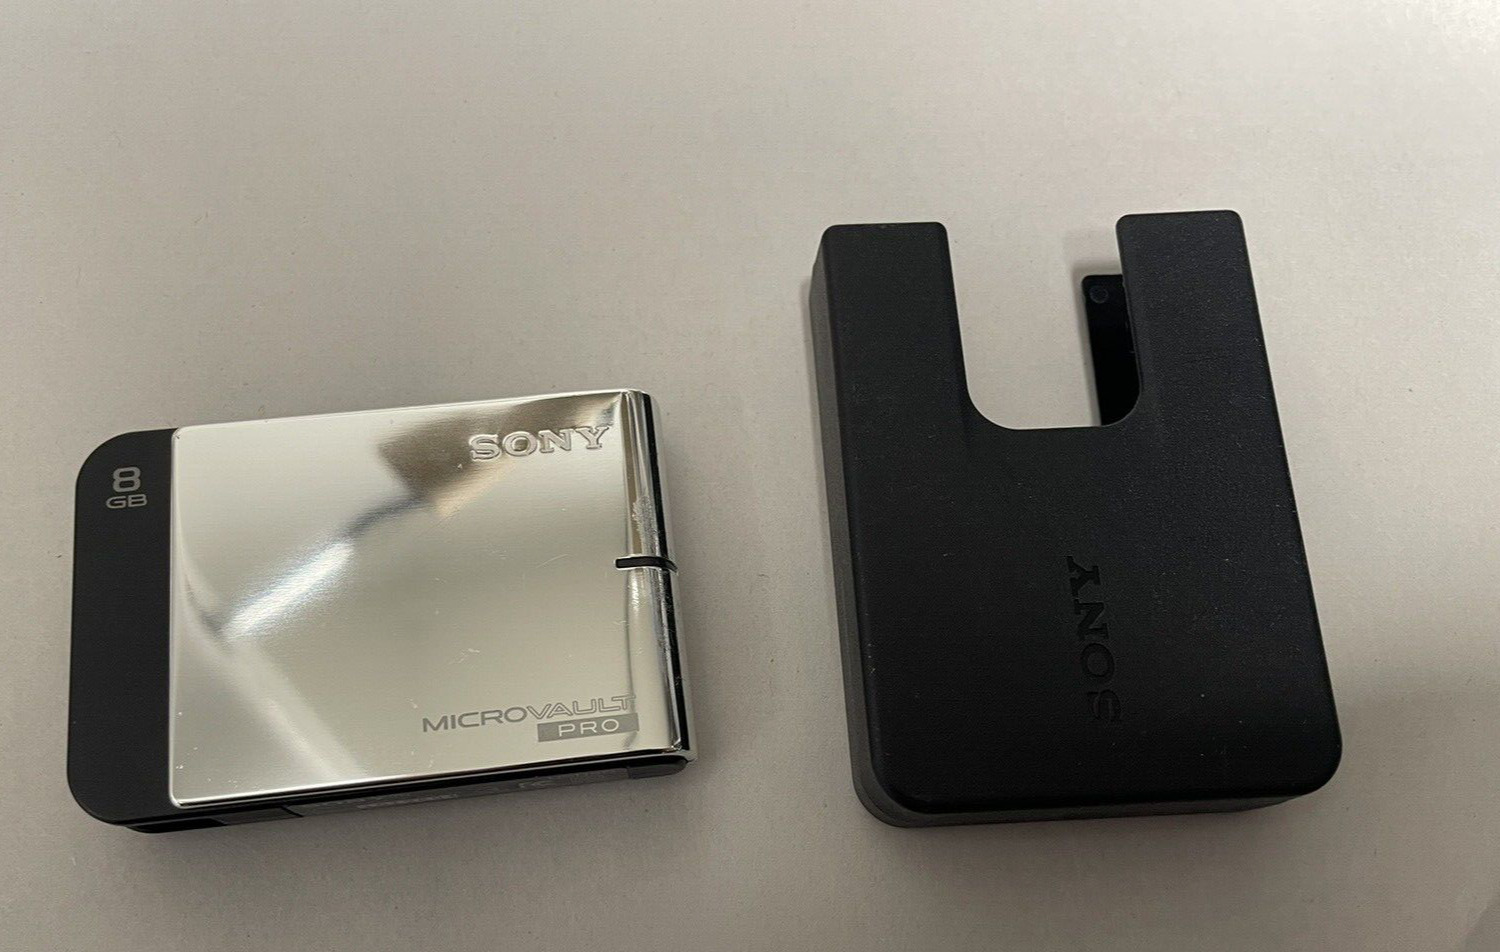 Rare Vtg Sony Microvault Pro 8GB USB Flash Drive Storage with Case USD8G Chrome